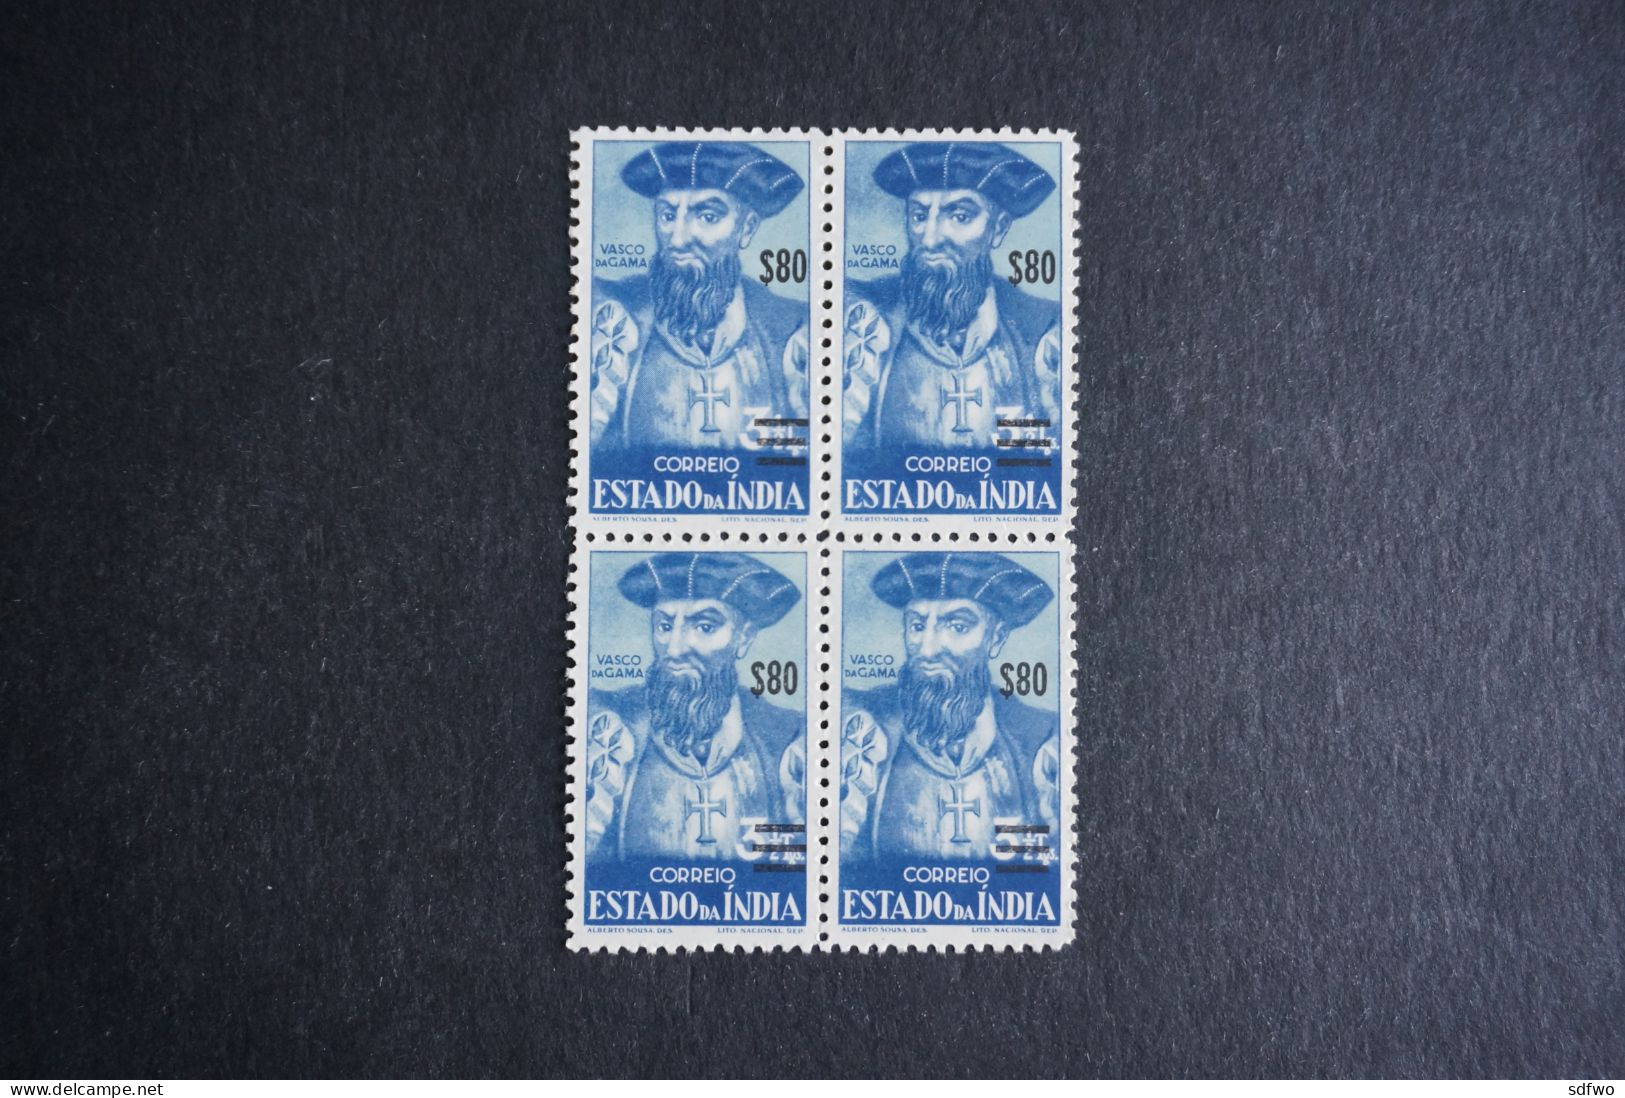 (G) Portuguese India 1959 Figures W/OVP $80 In Block Of 4 - MNH - Portugiesisch-Indien